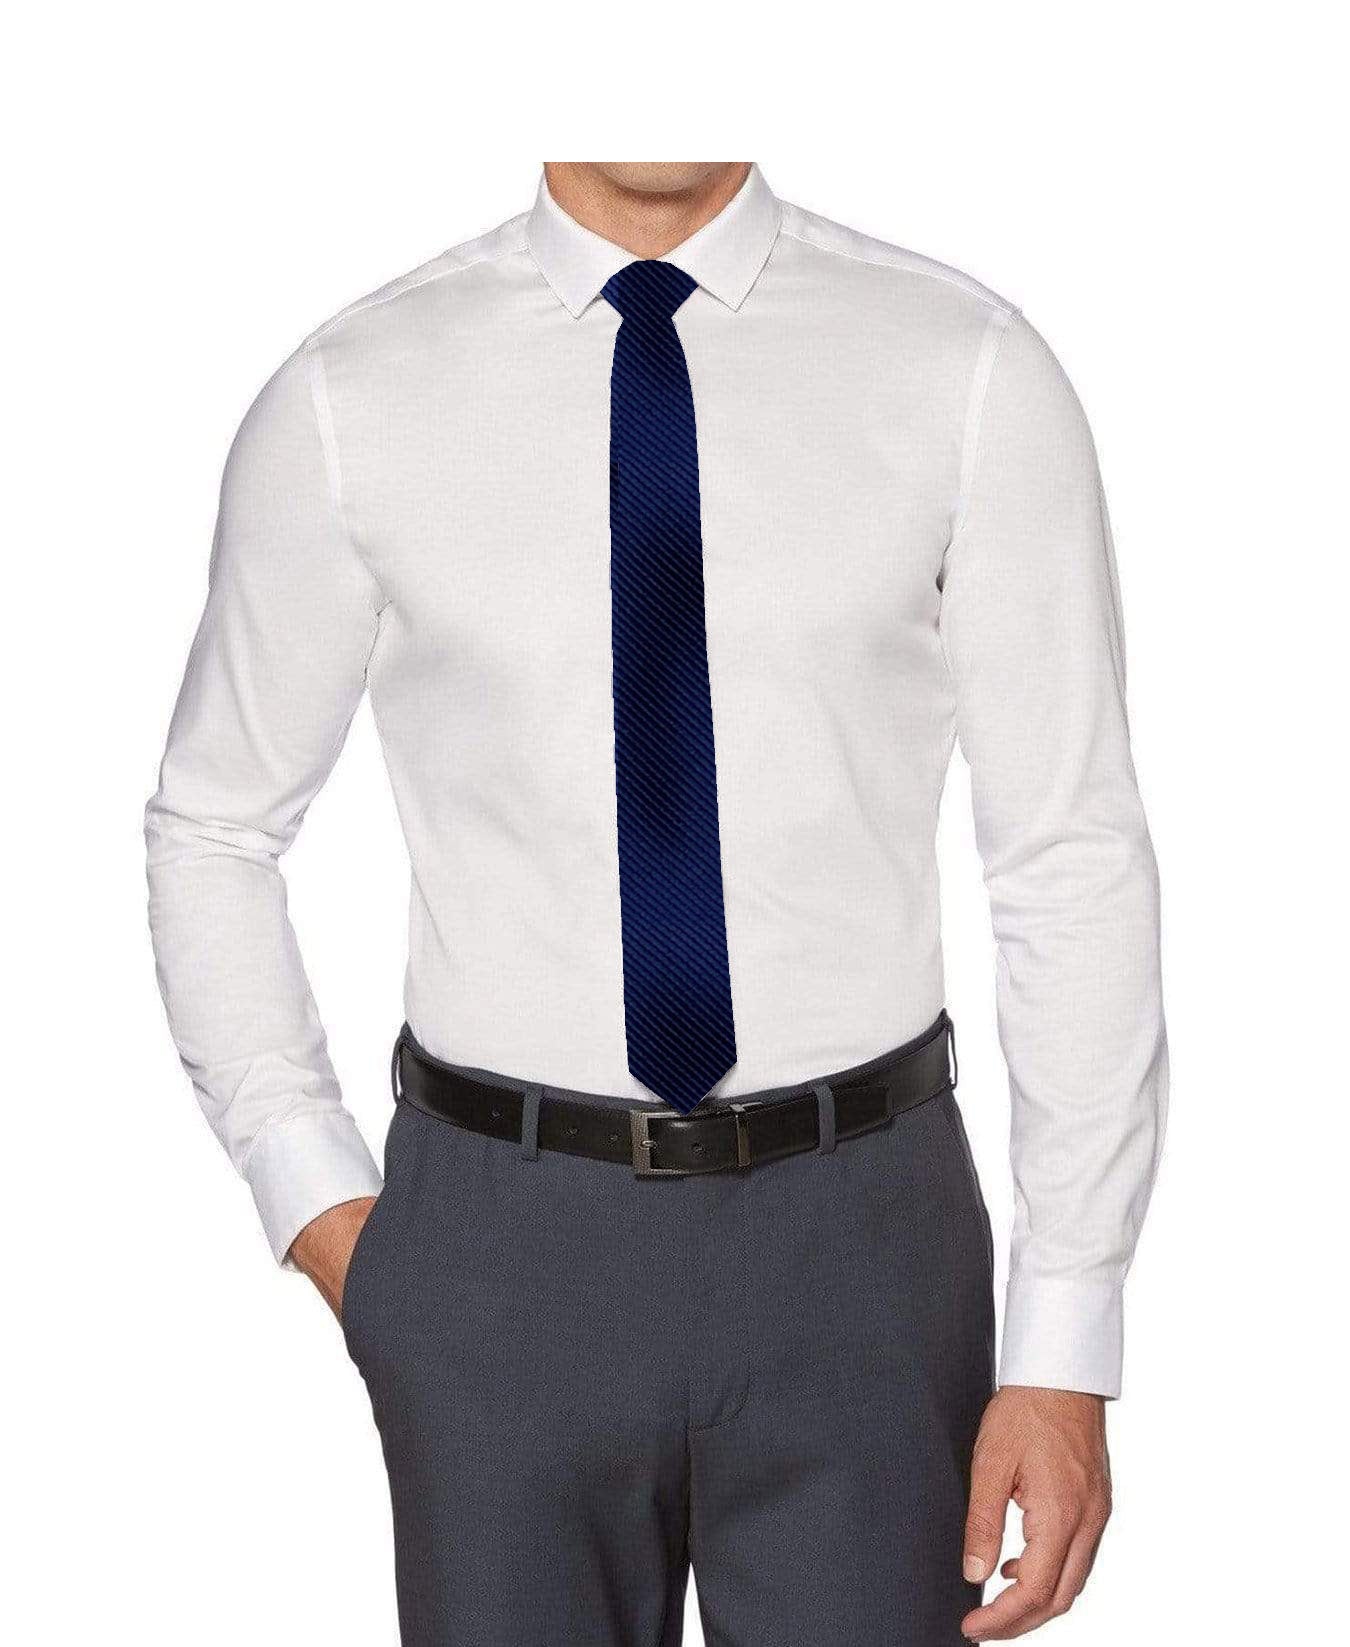 Perry Ellis Boys Dress Shirts w R Blue Tie Solid Shirts w Colored Tie